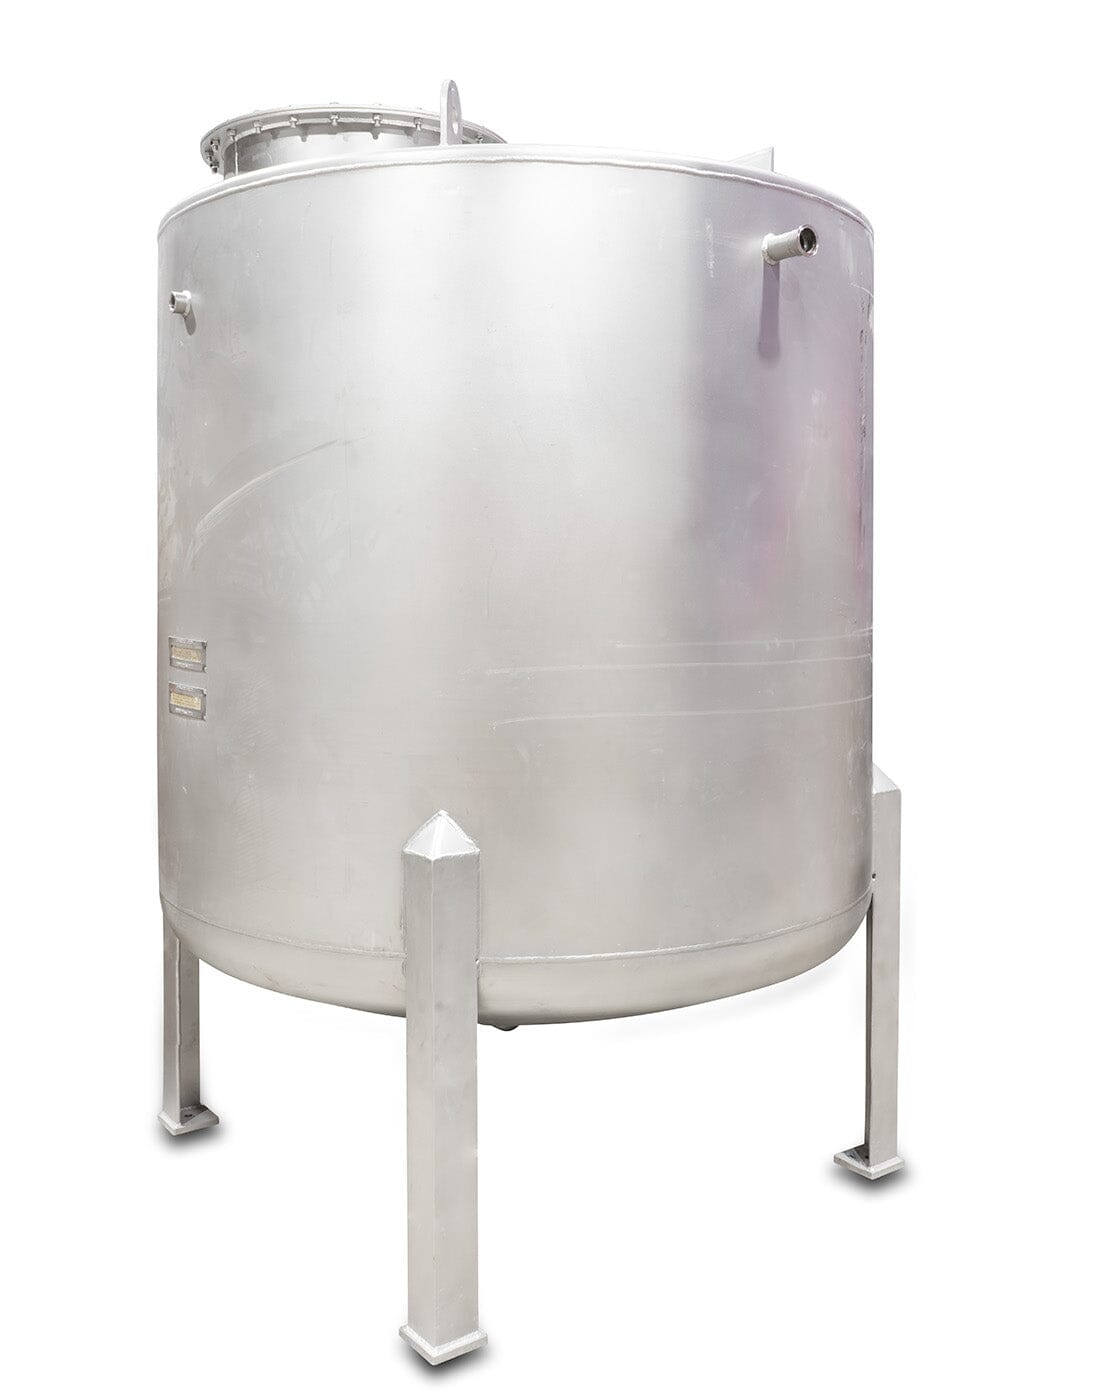 CB MILLS, 1000 Gallon Stainless Steel UL Listed (UL-142) Ethanol Storage Tank